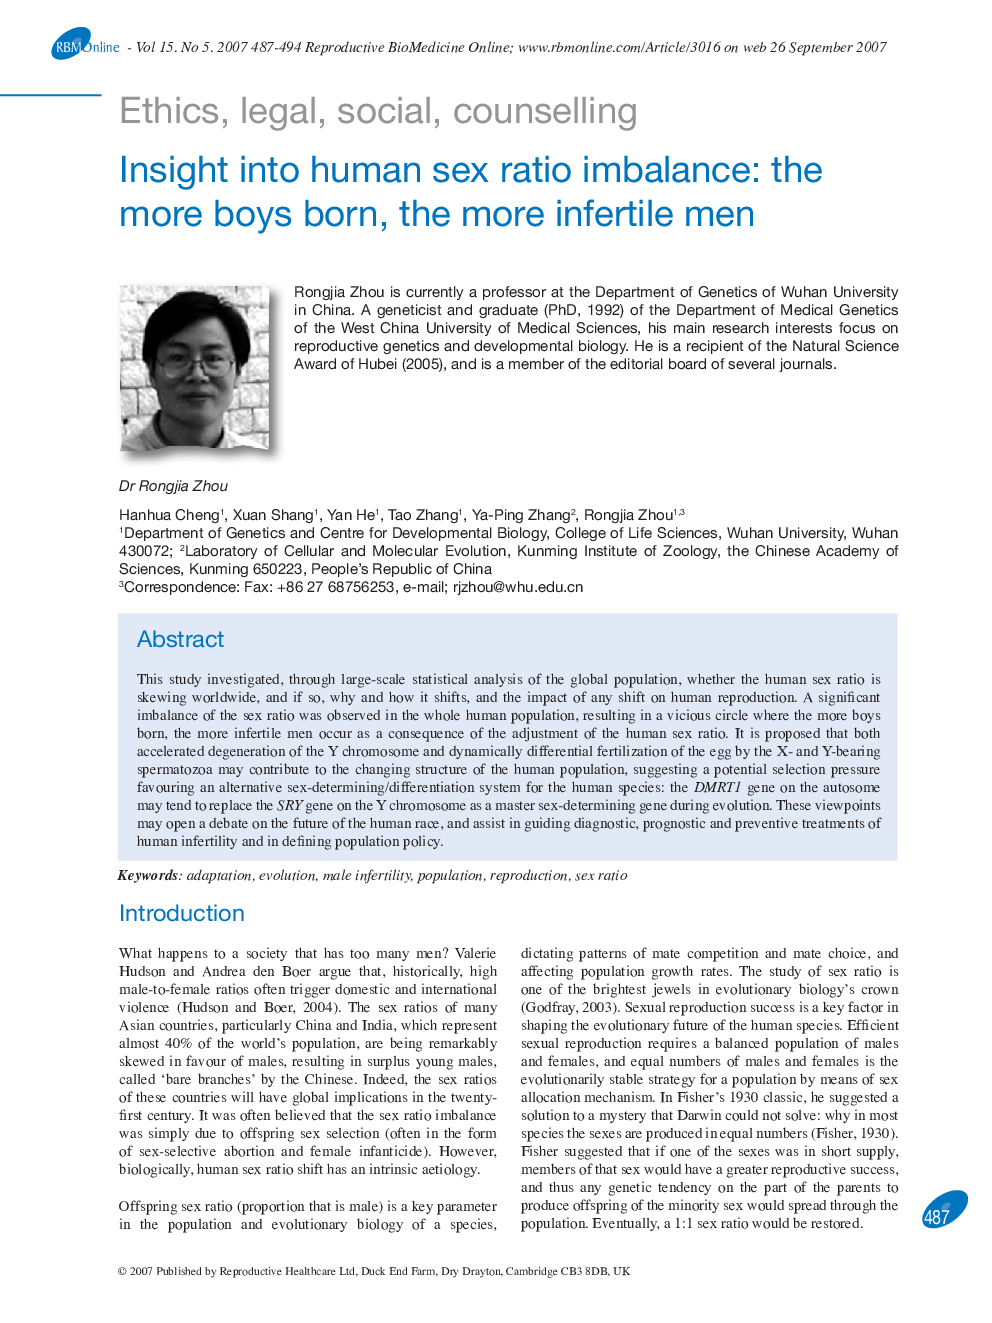 Insight into human sex ratio imbalance: the more boys born, the more infertile men